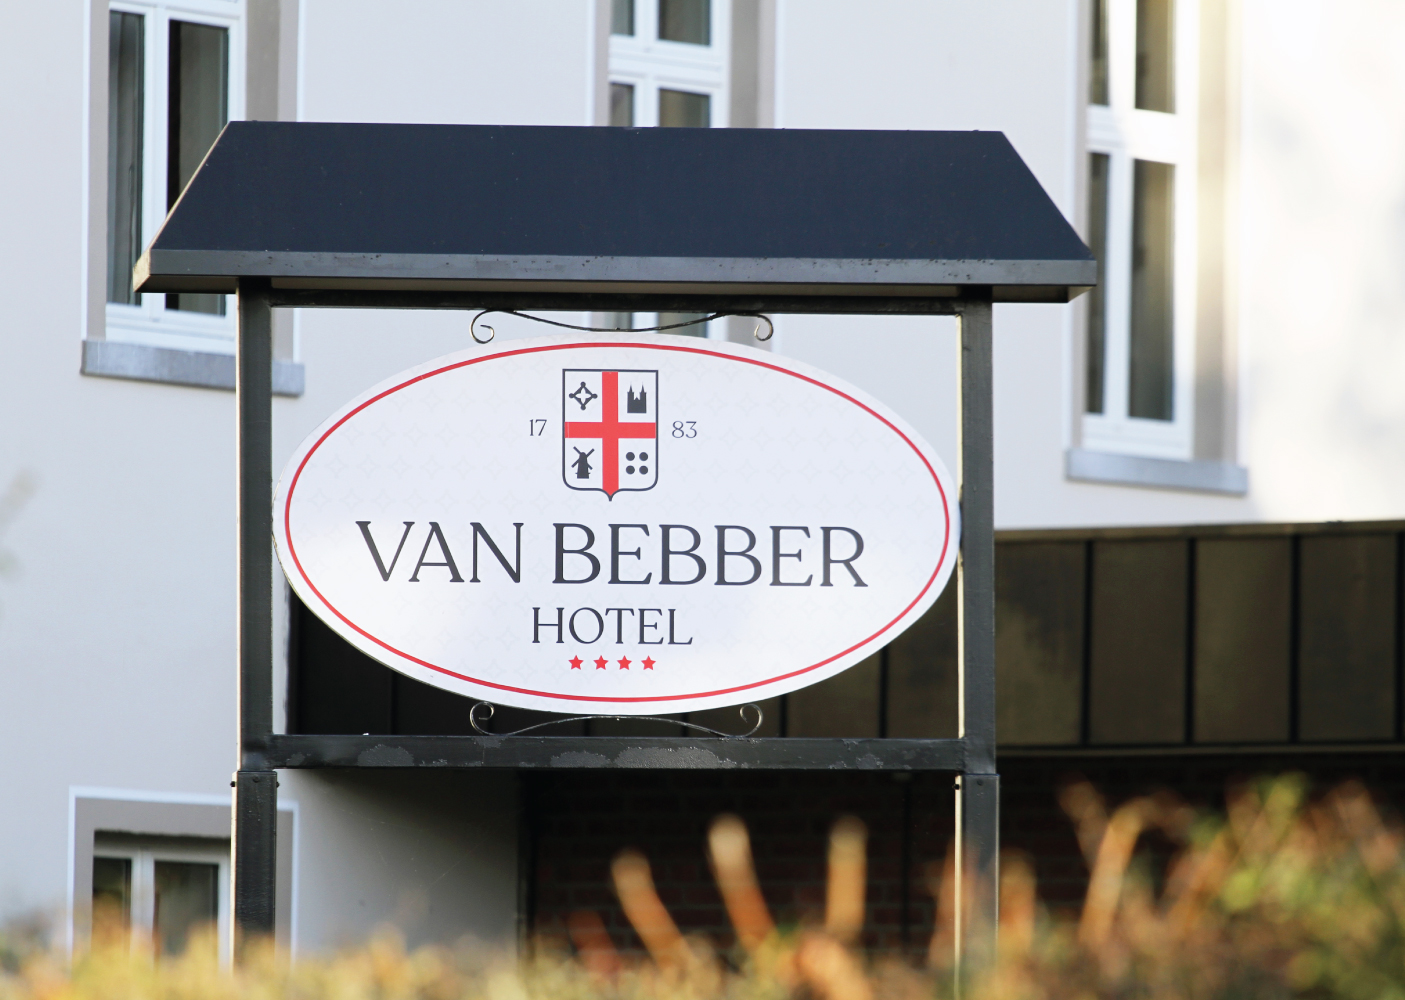 300 Year-Old-Hotel Branding for Hotel Van Bebber Design by Agi Haxhimurati